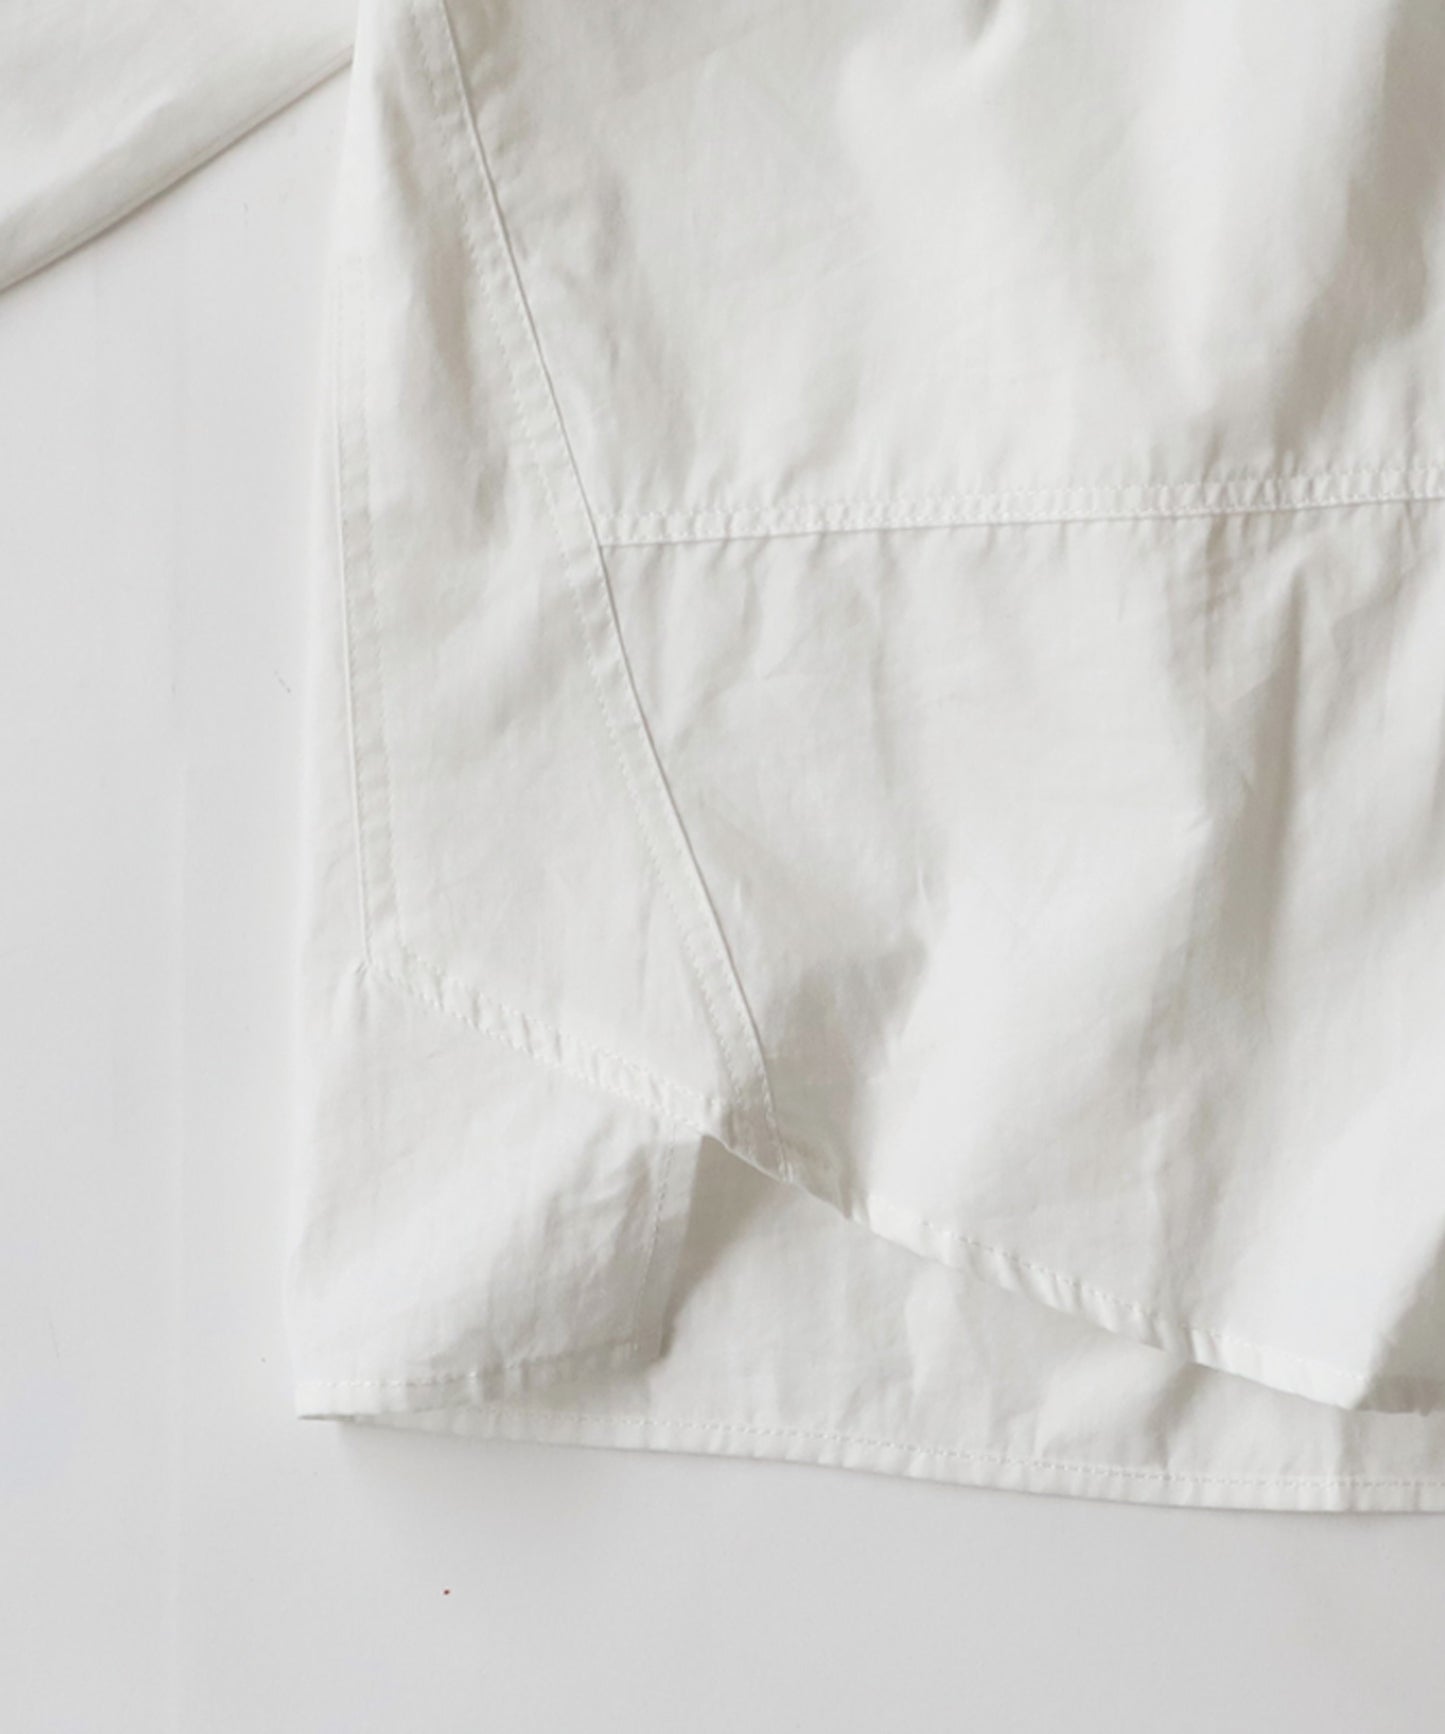 Design Pocket Ladies Shirt Tops